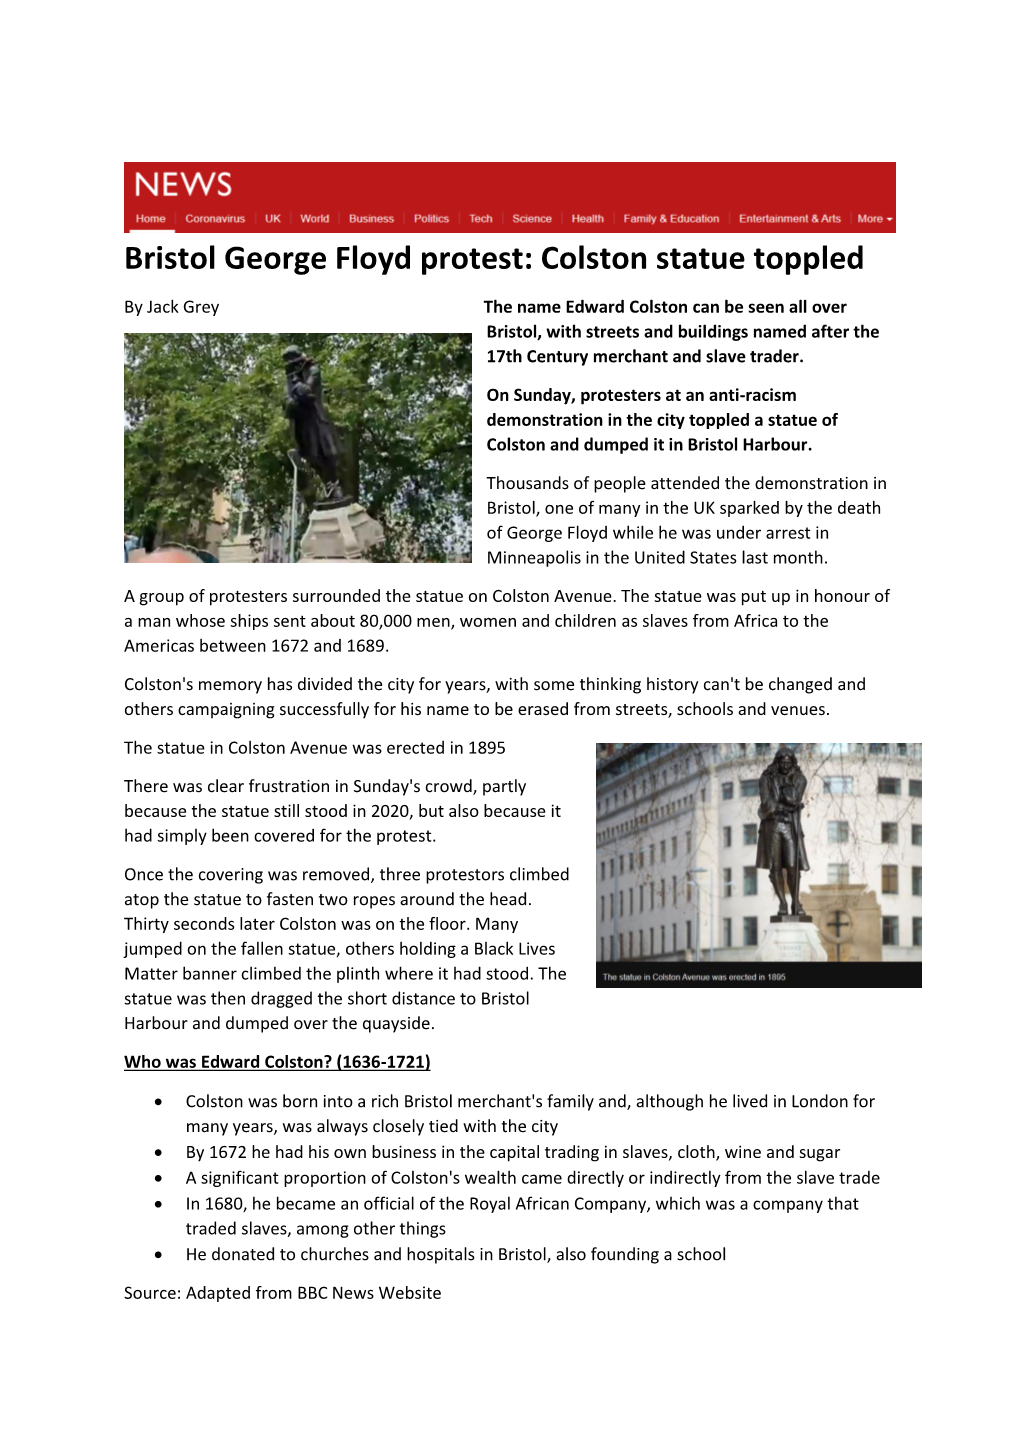 Bristol George Floyd Protest: Colston Statue Toppled